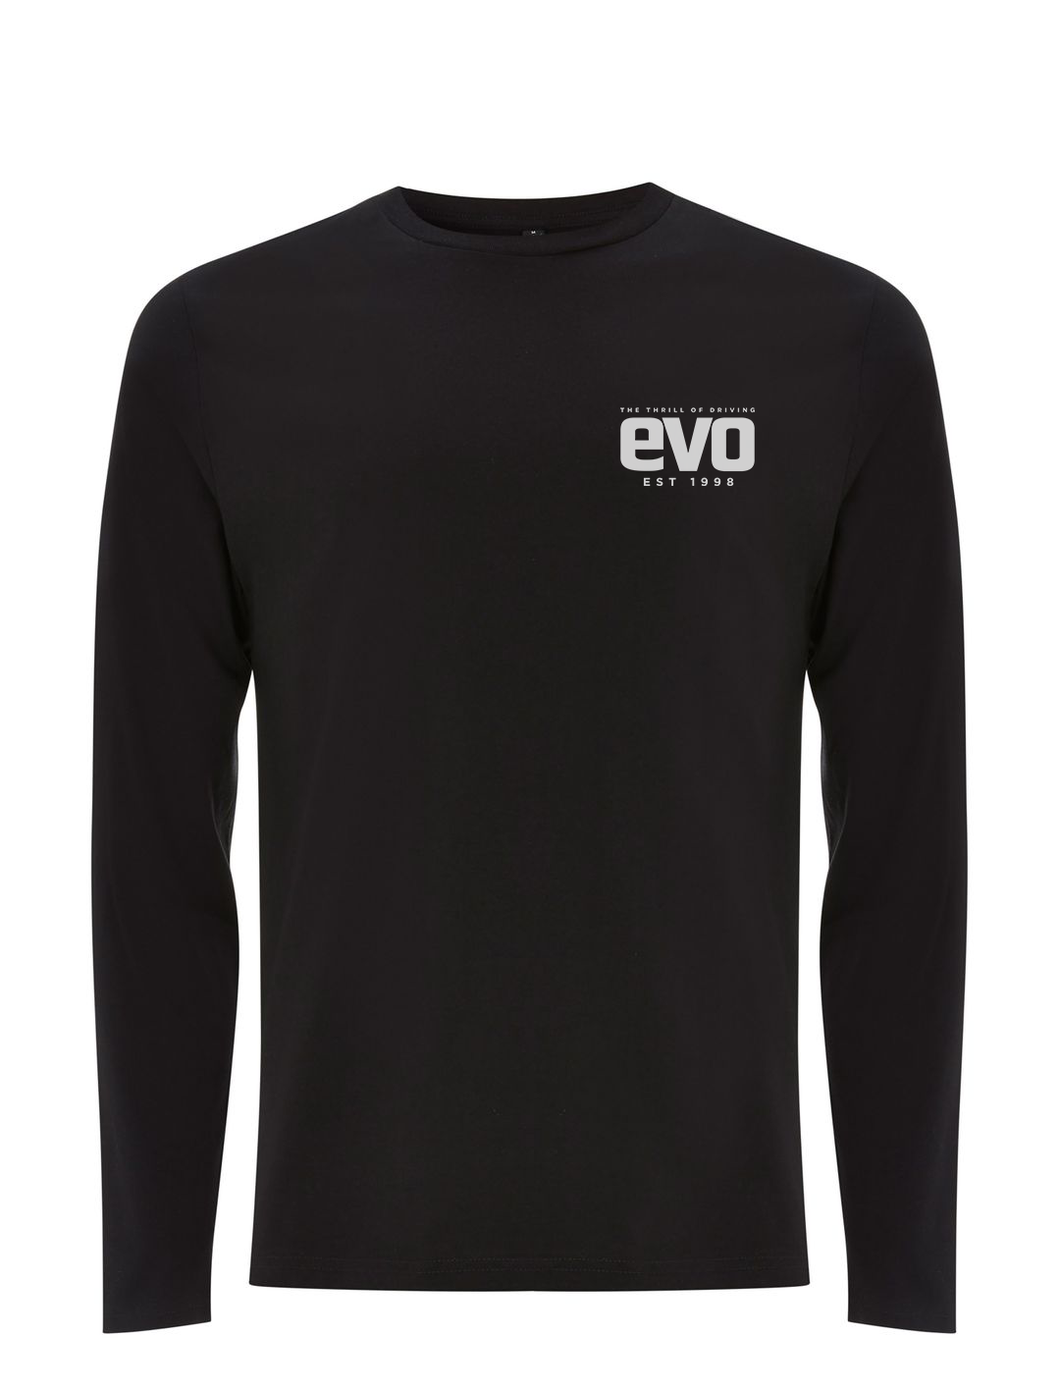 evo Earth Positive Premium Unisex Long Sleeve T Shirt